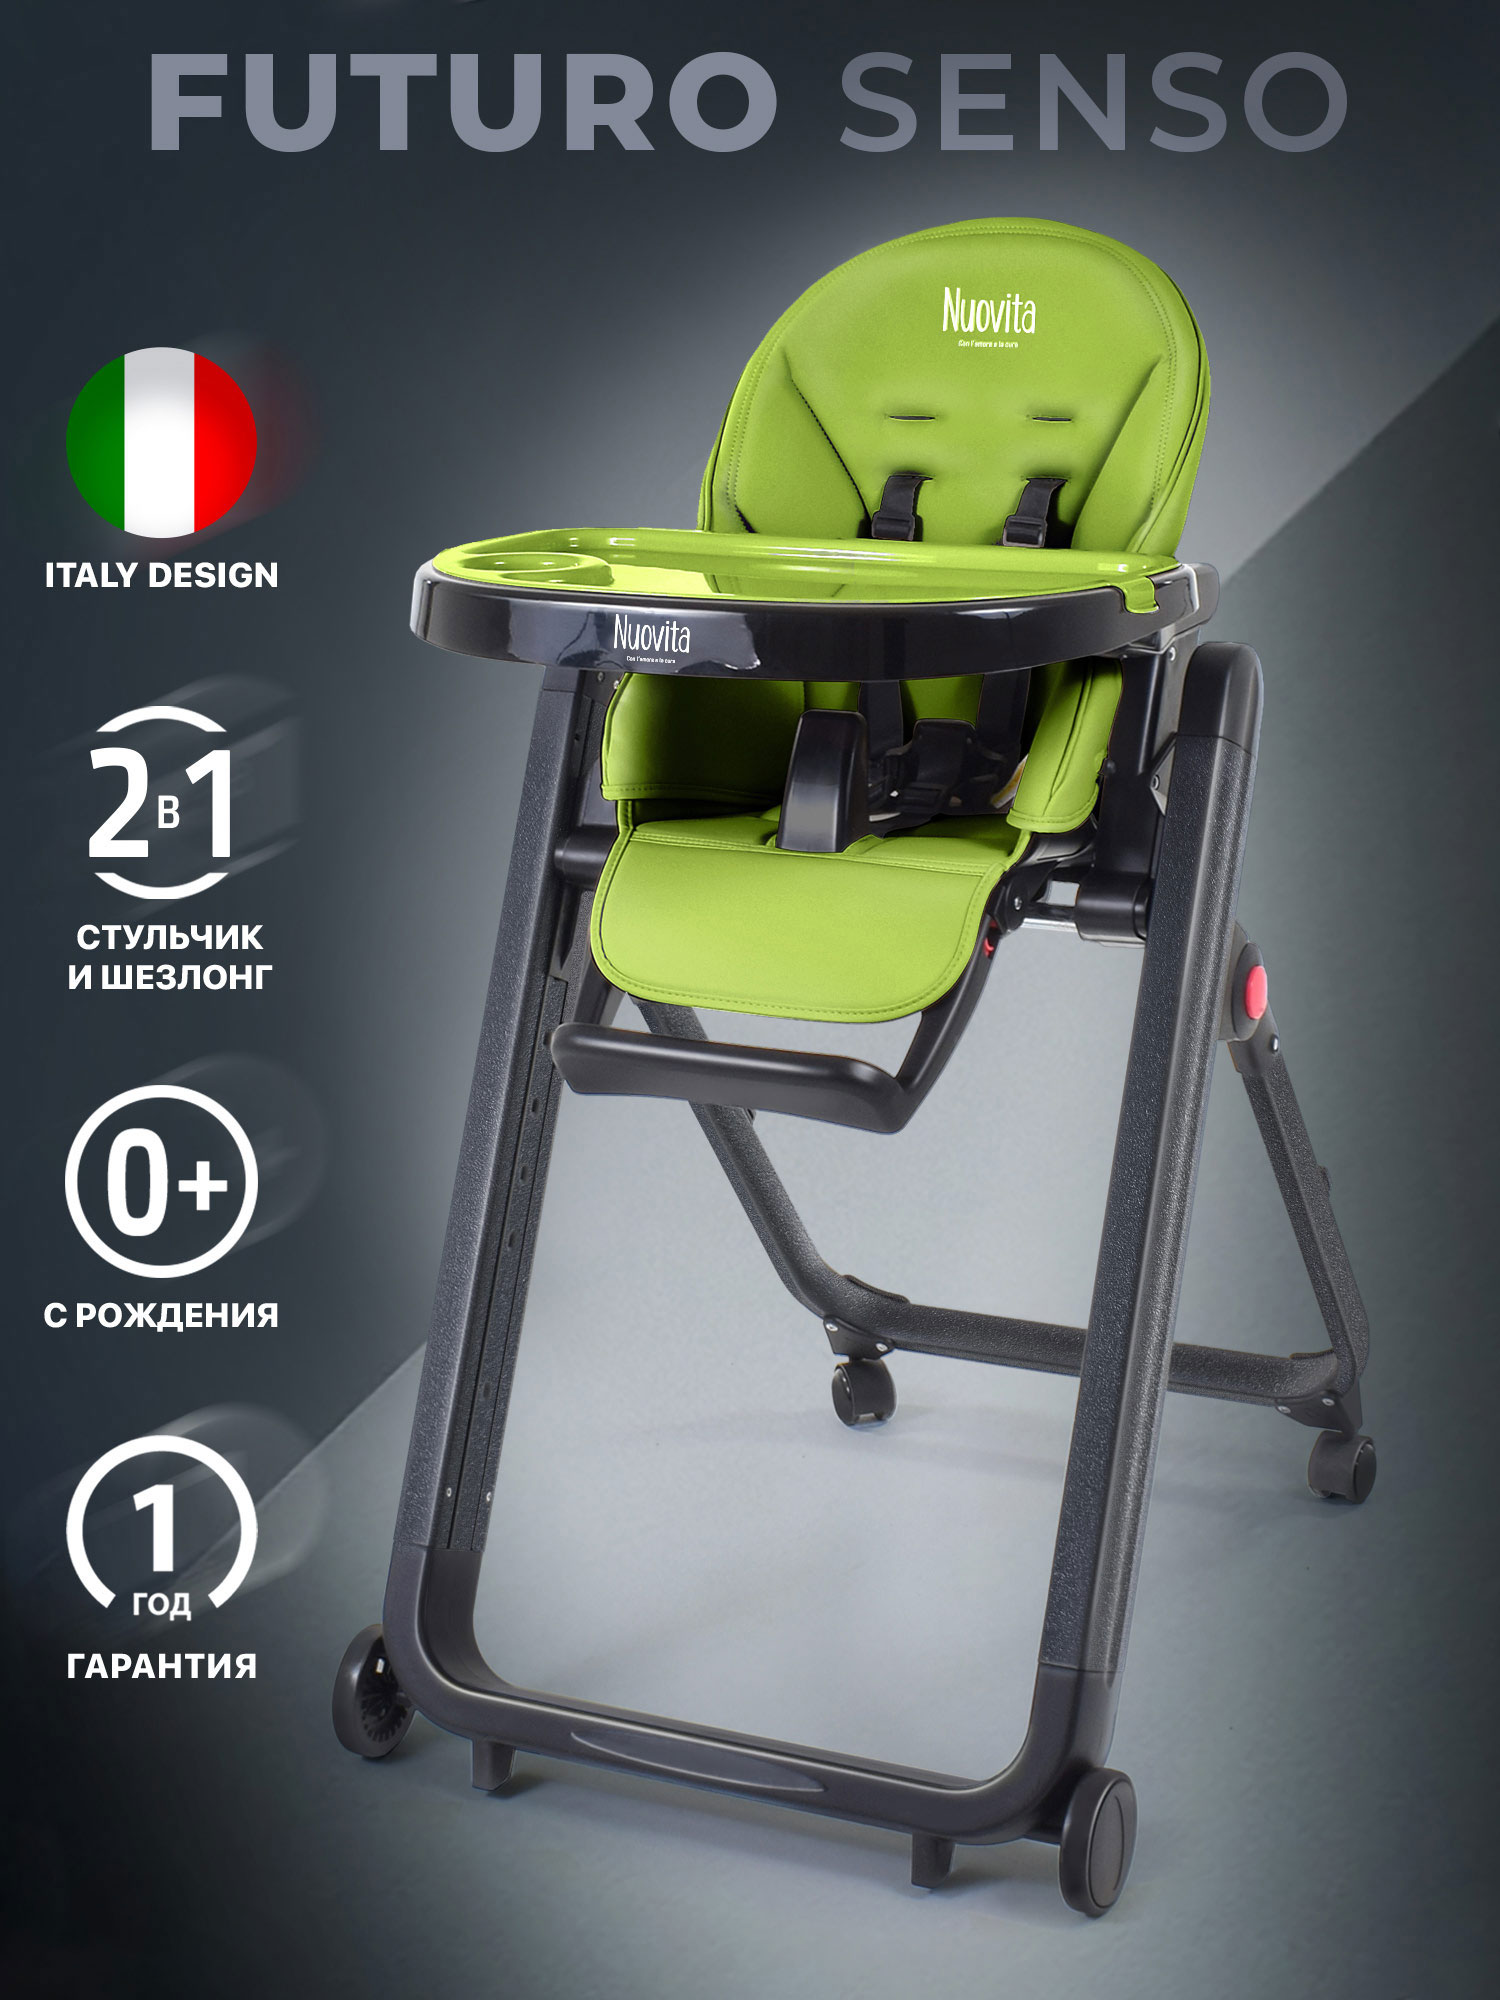 Стульчик для кормления Nuovita Futuro Senso Nero (Verde/Зеленый) стульчик для кормления nuovita futuro senso nero verde зеленый